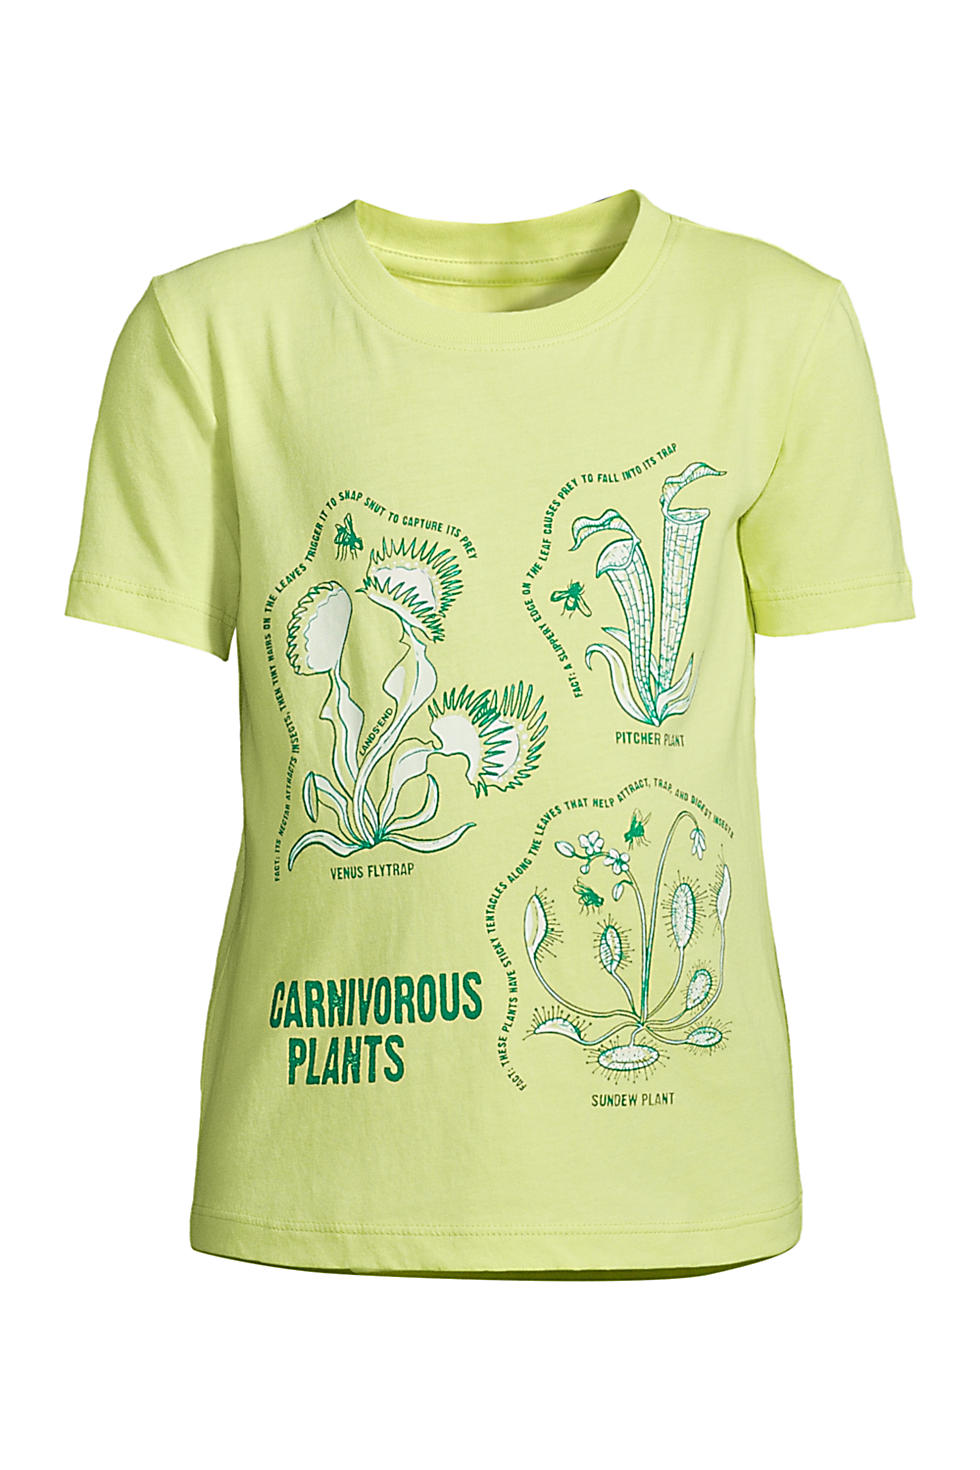 Lands End Boys Short Sleeve Graphic Tee (Carnivorous Plants)